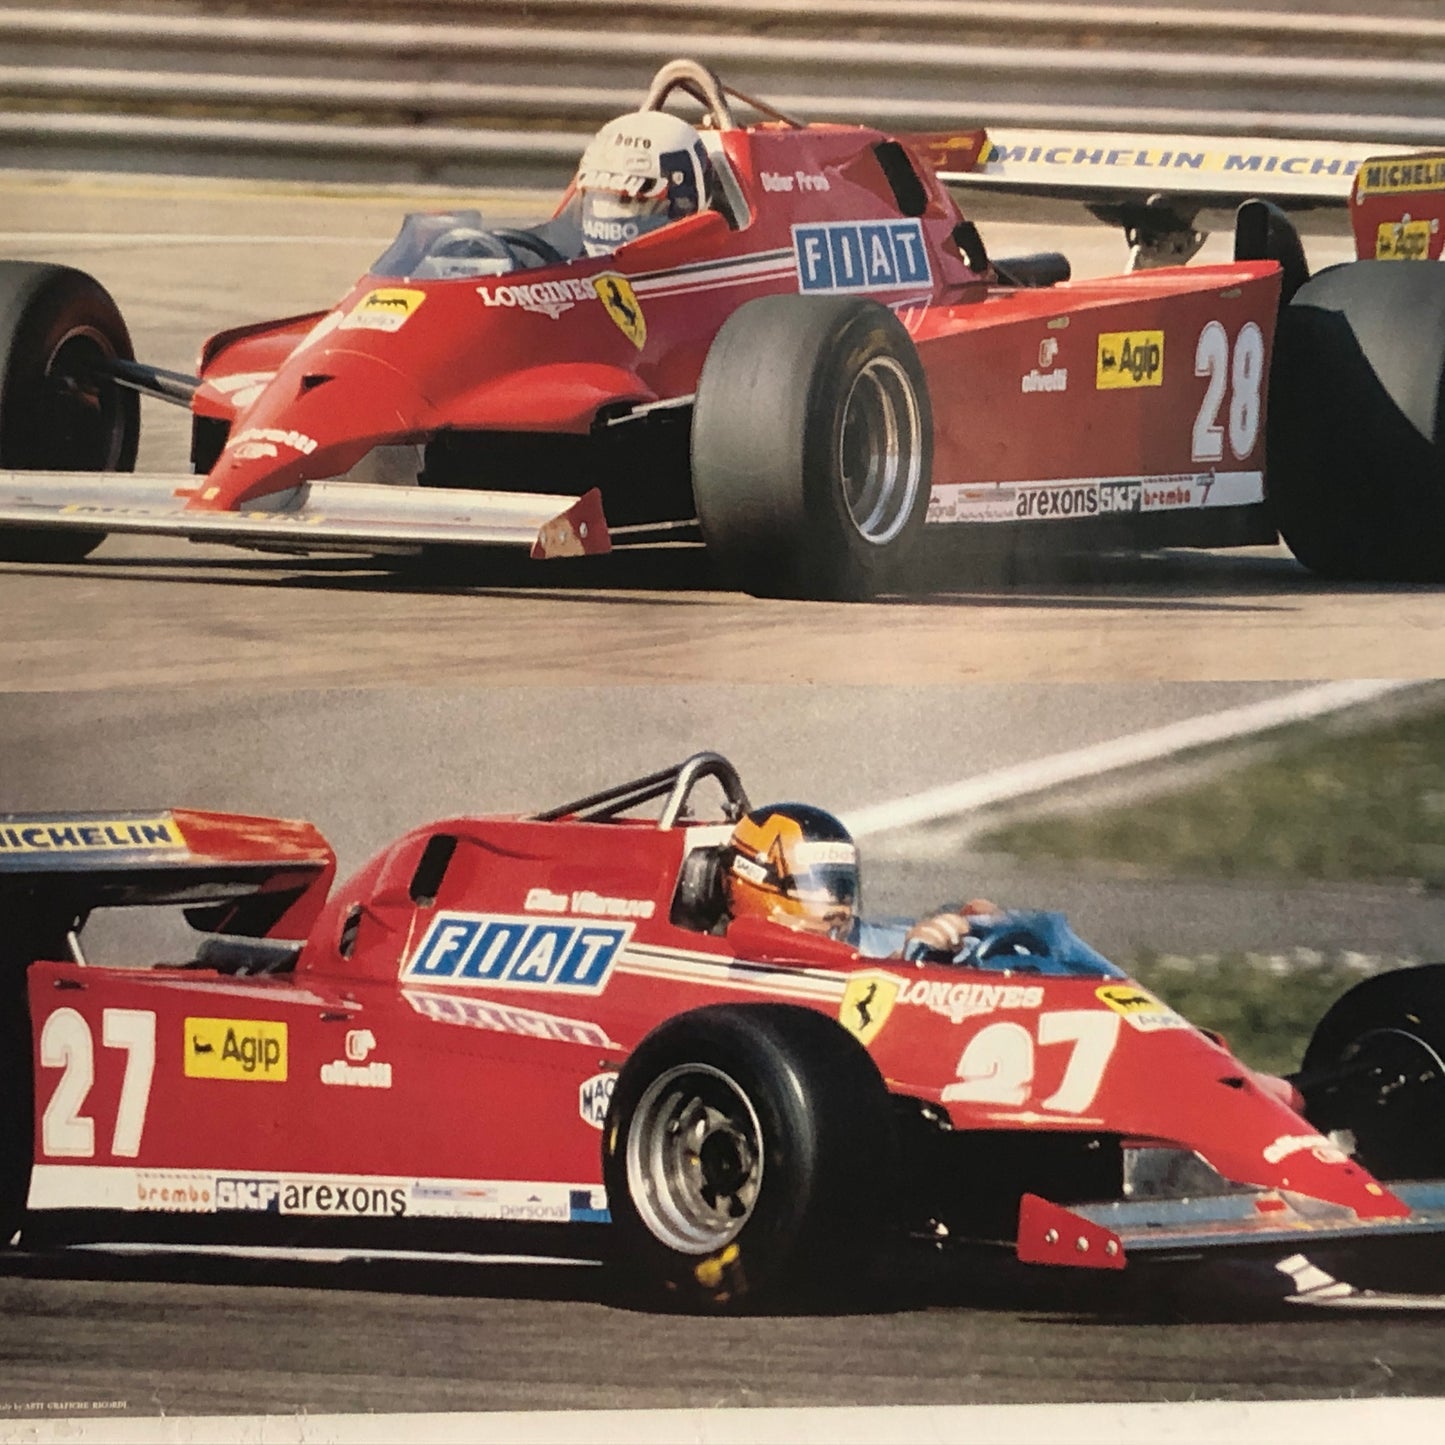 Ferrari Poster Ferrari 126 CX - CK with Gilles Villeneuve and Didier Pironi from the 70s